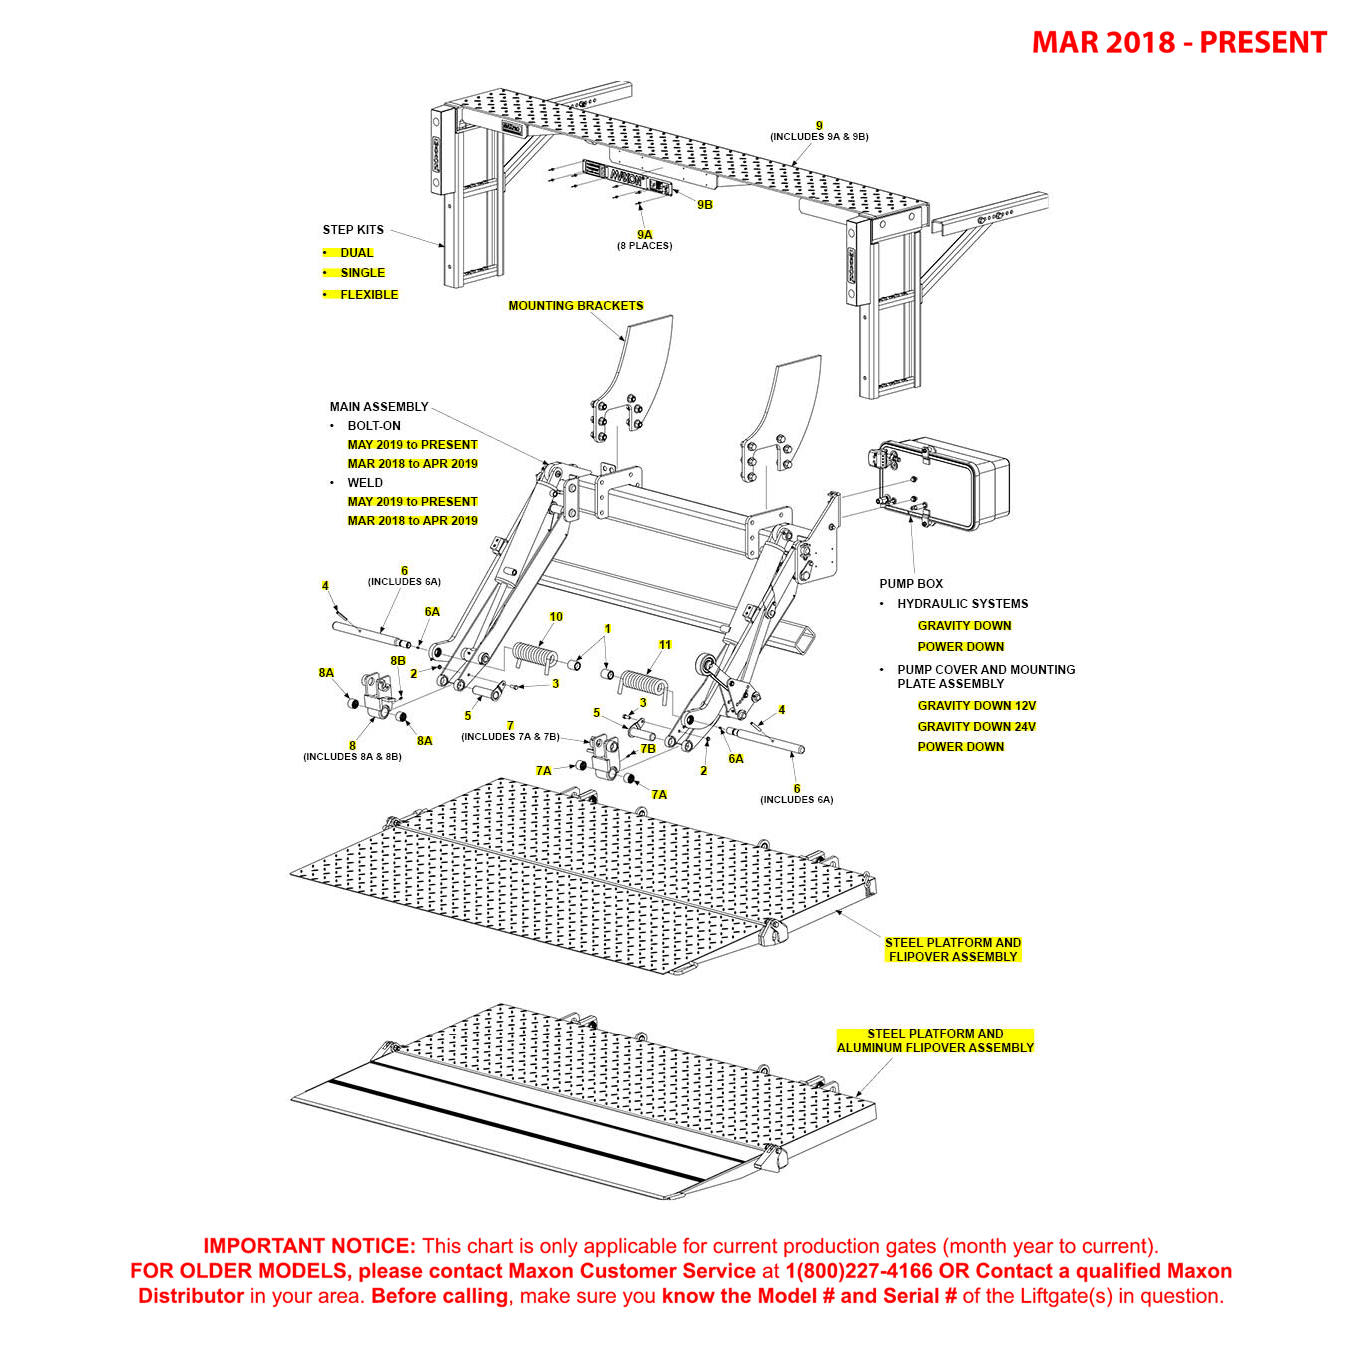 Maxon TE-33 (Mar 2018 - Present) Steel Platform Final Assembly Diagram